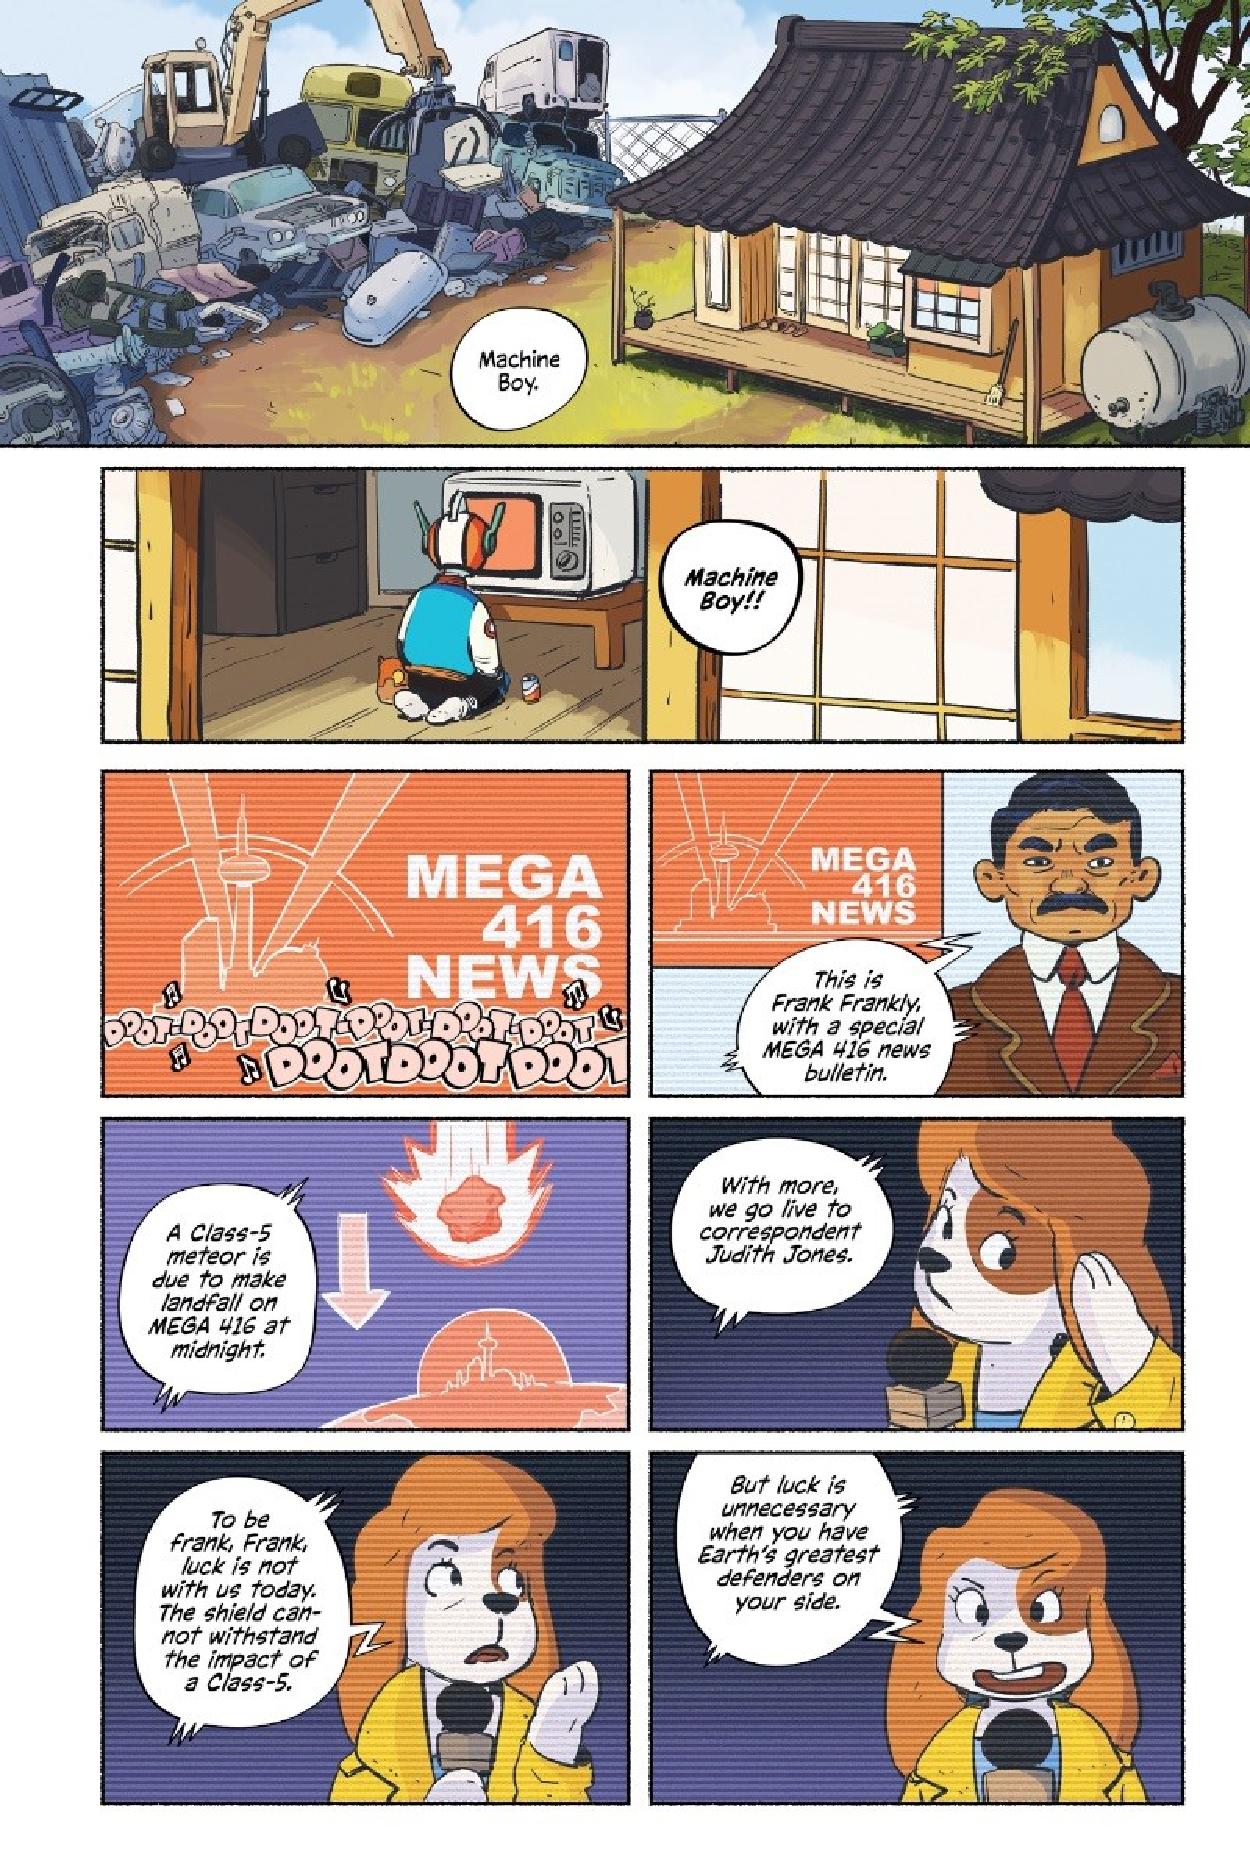 Everyday Hero Machine Boy Graphic Novel